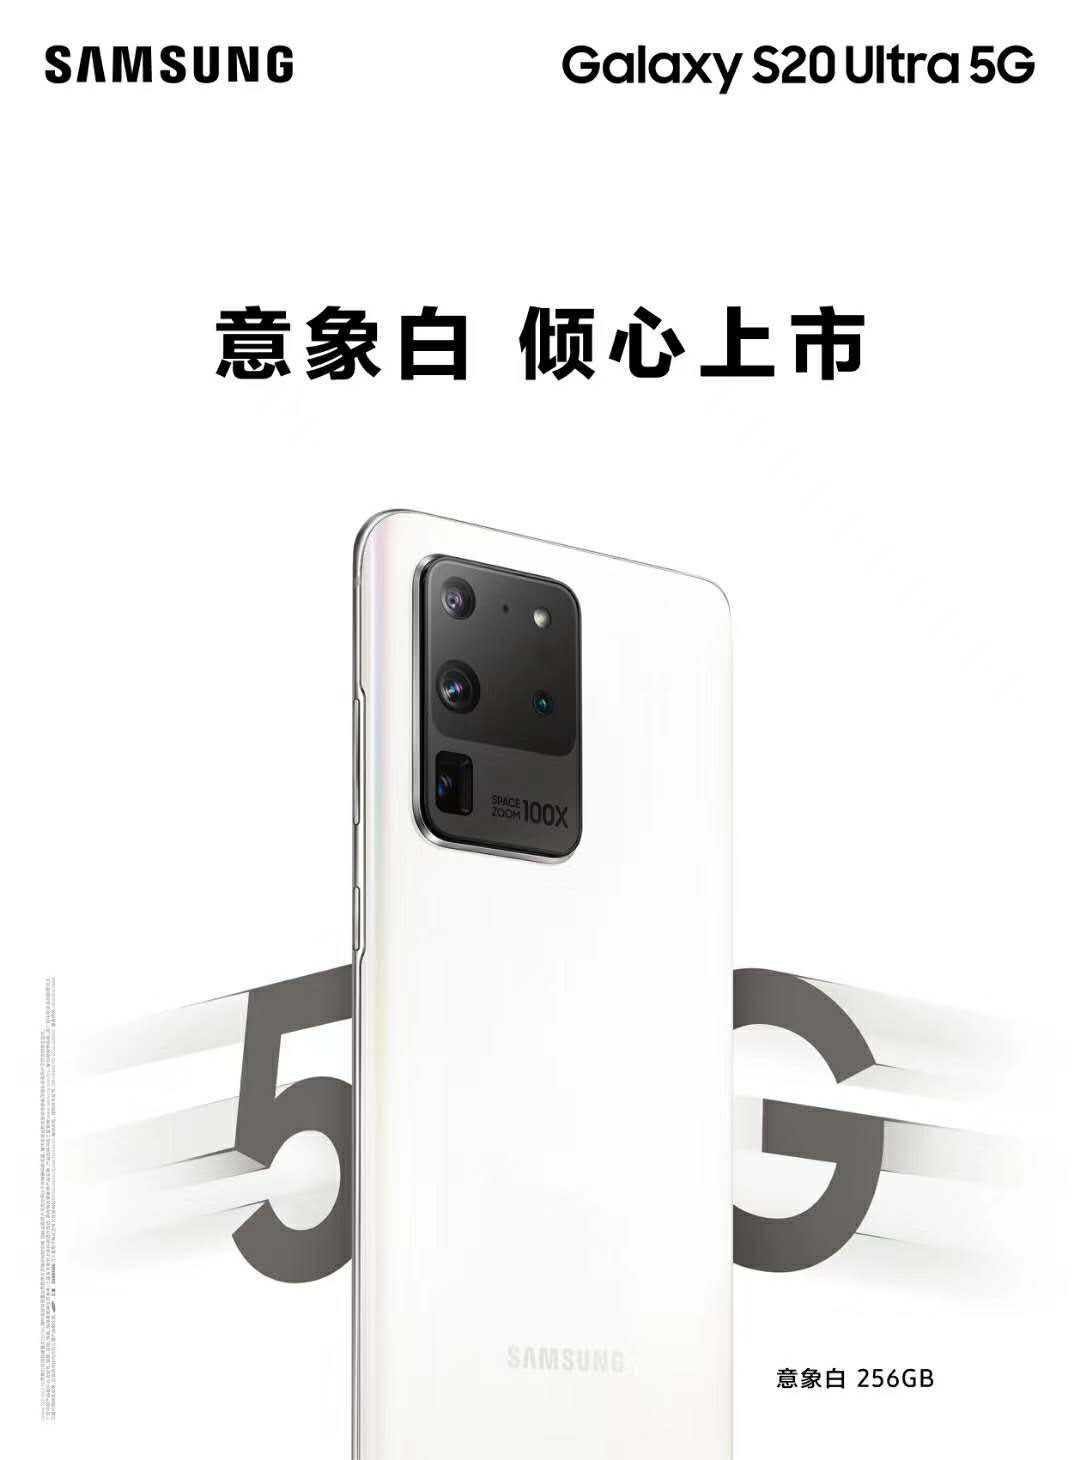 Beyaz Galaxy S20 Ultra 5G afişi sızdırıldı! - ShiftDelete.Net(1)